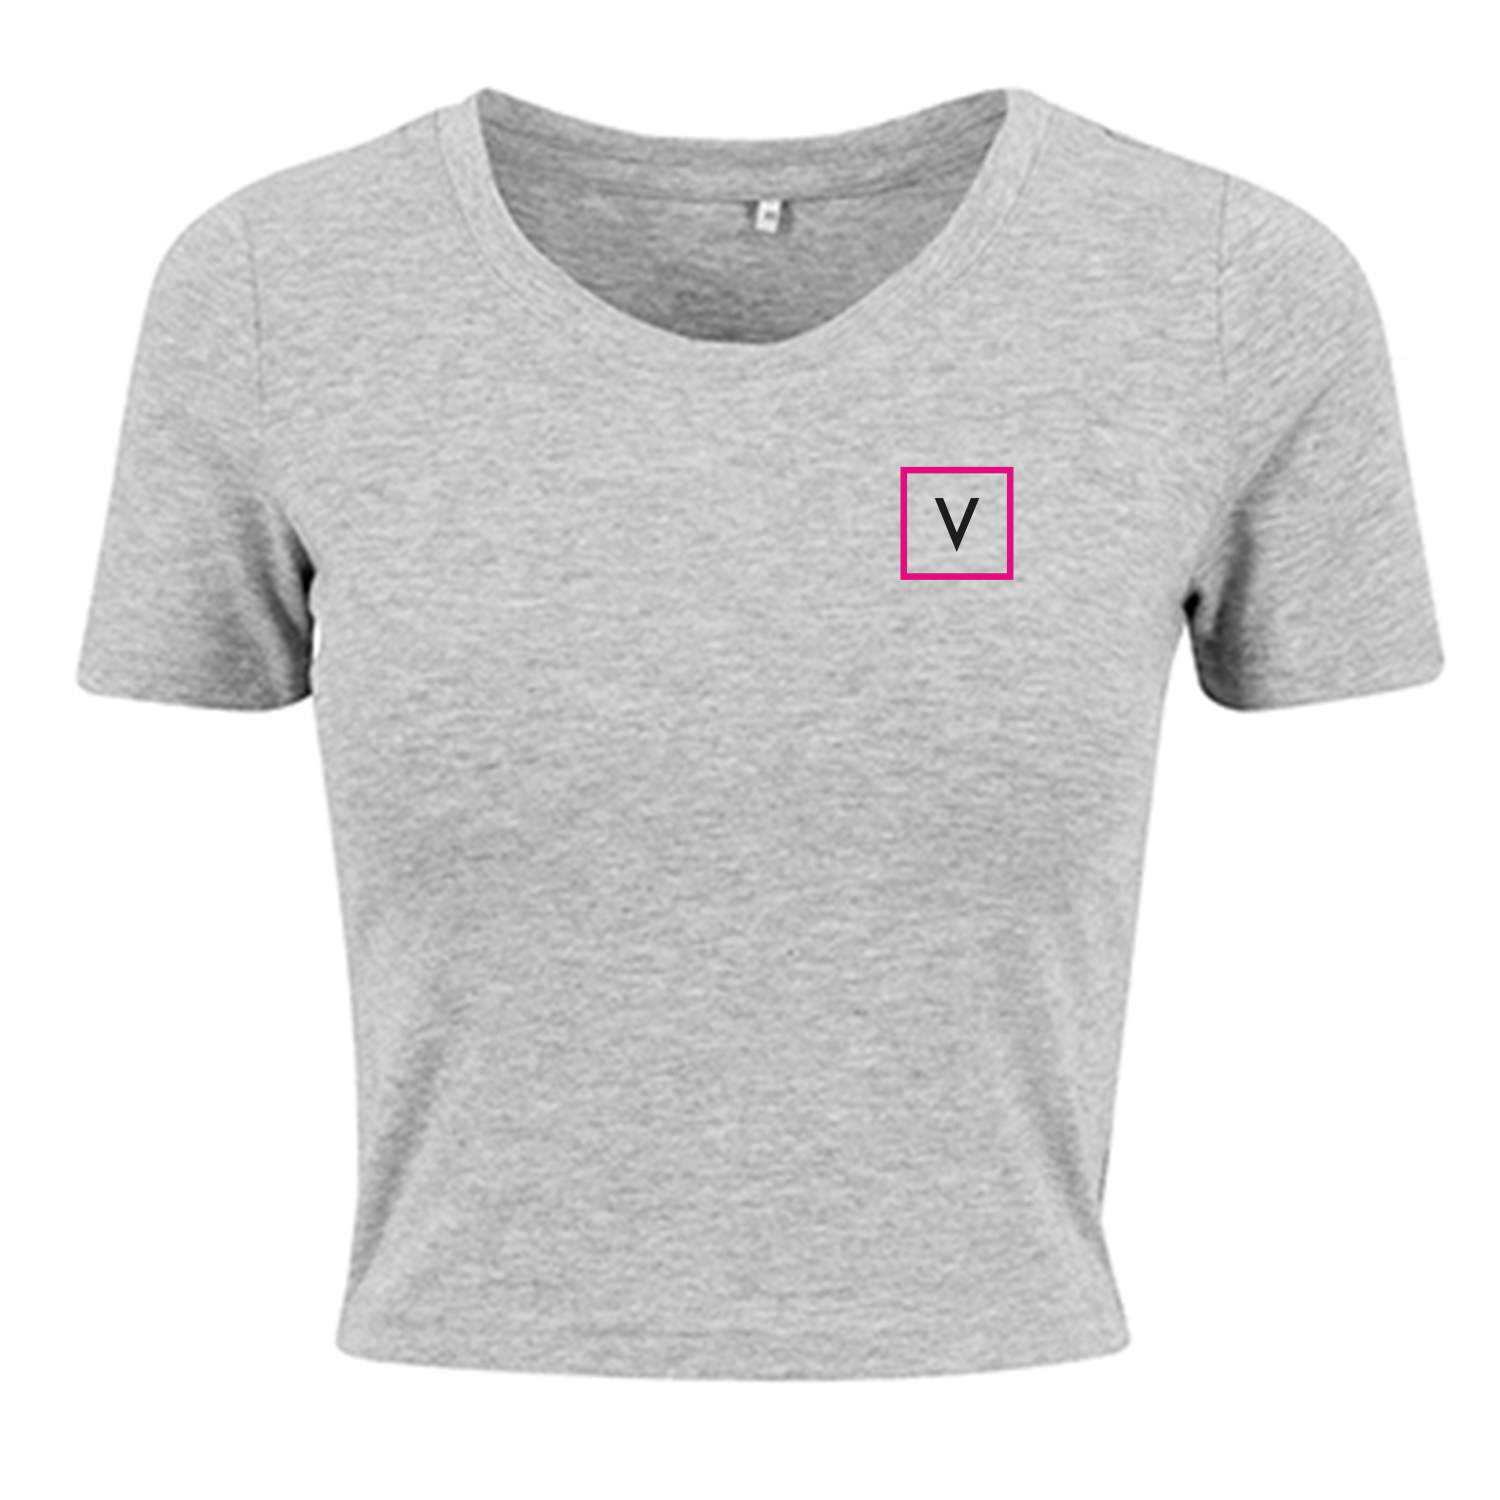 VENUS Girl's Cropped Top "V" - Heather Grey/Schwarz/Pink